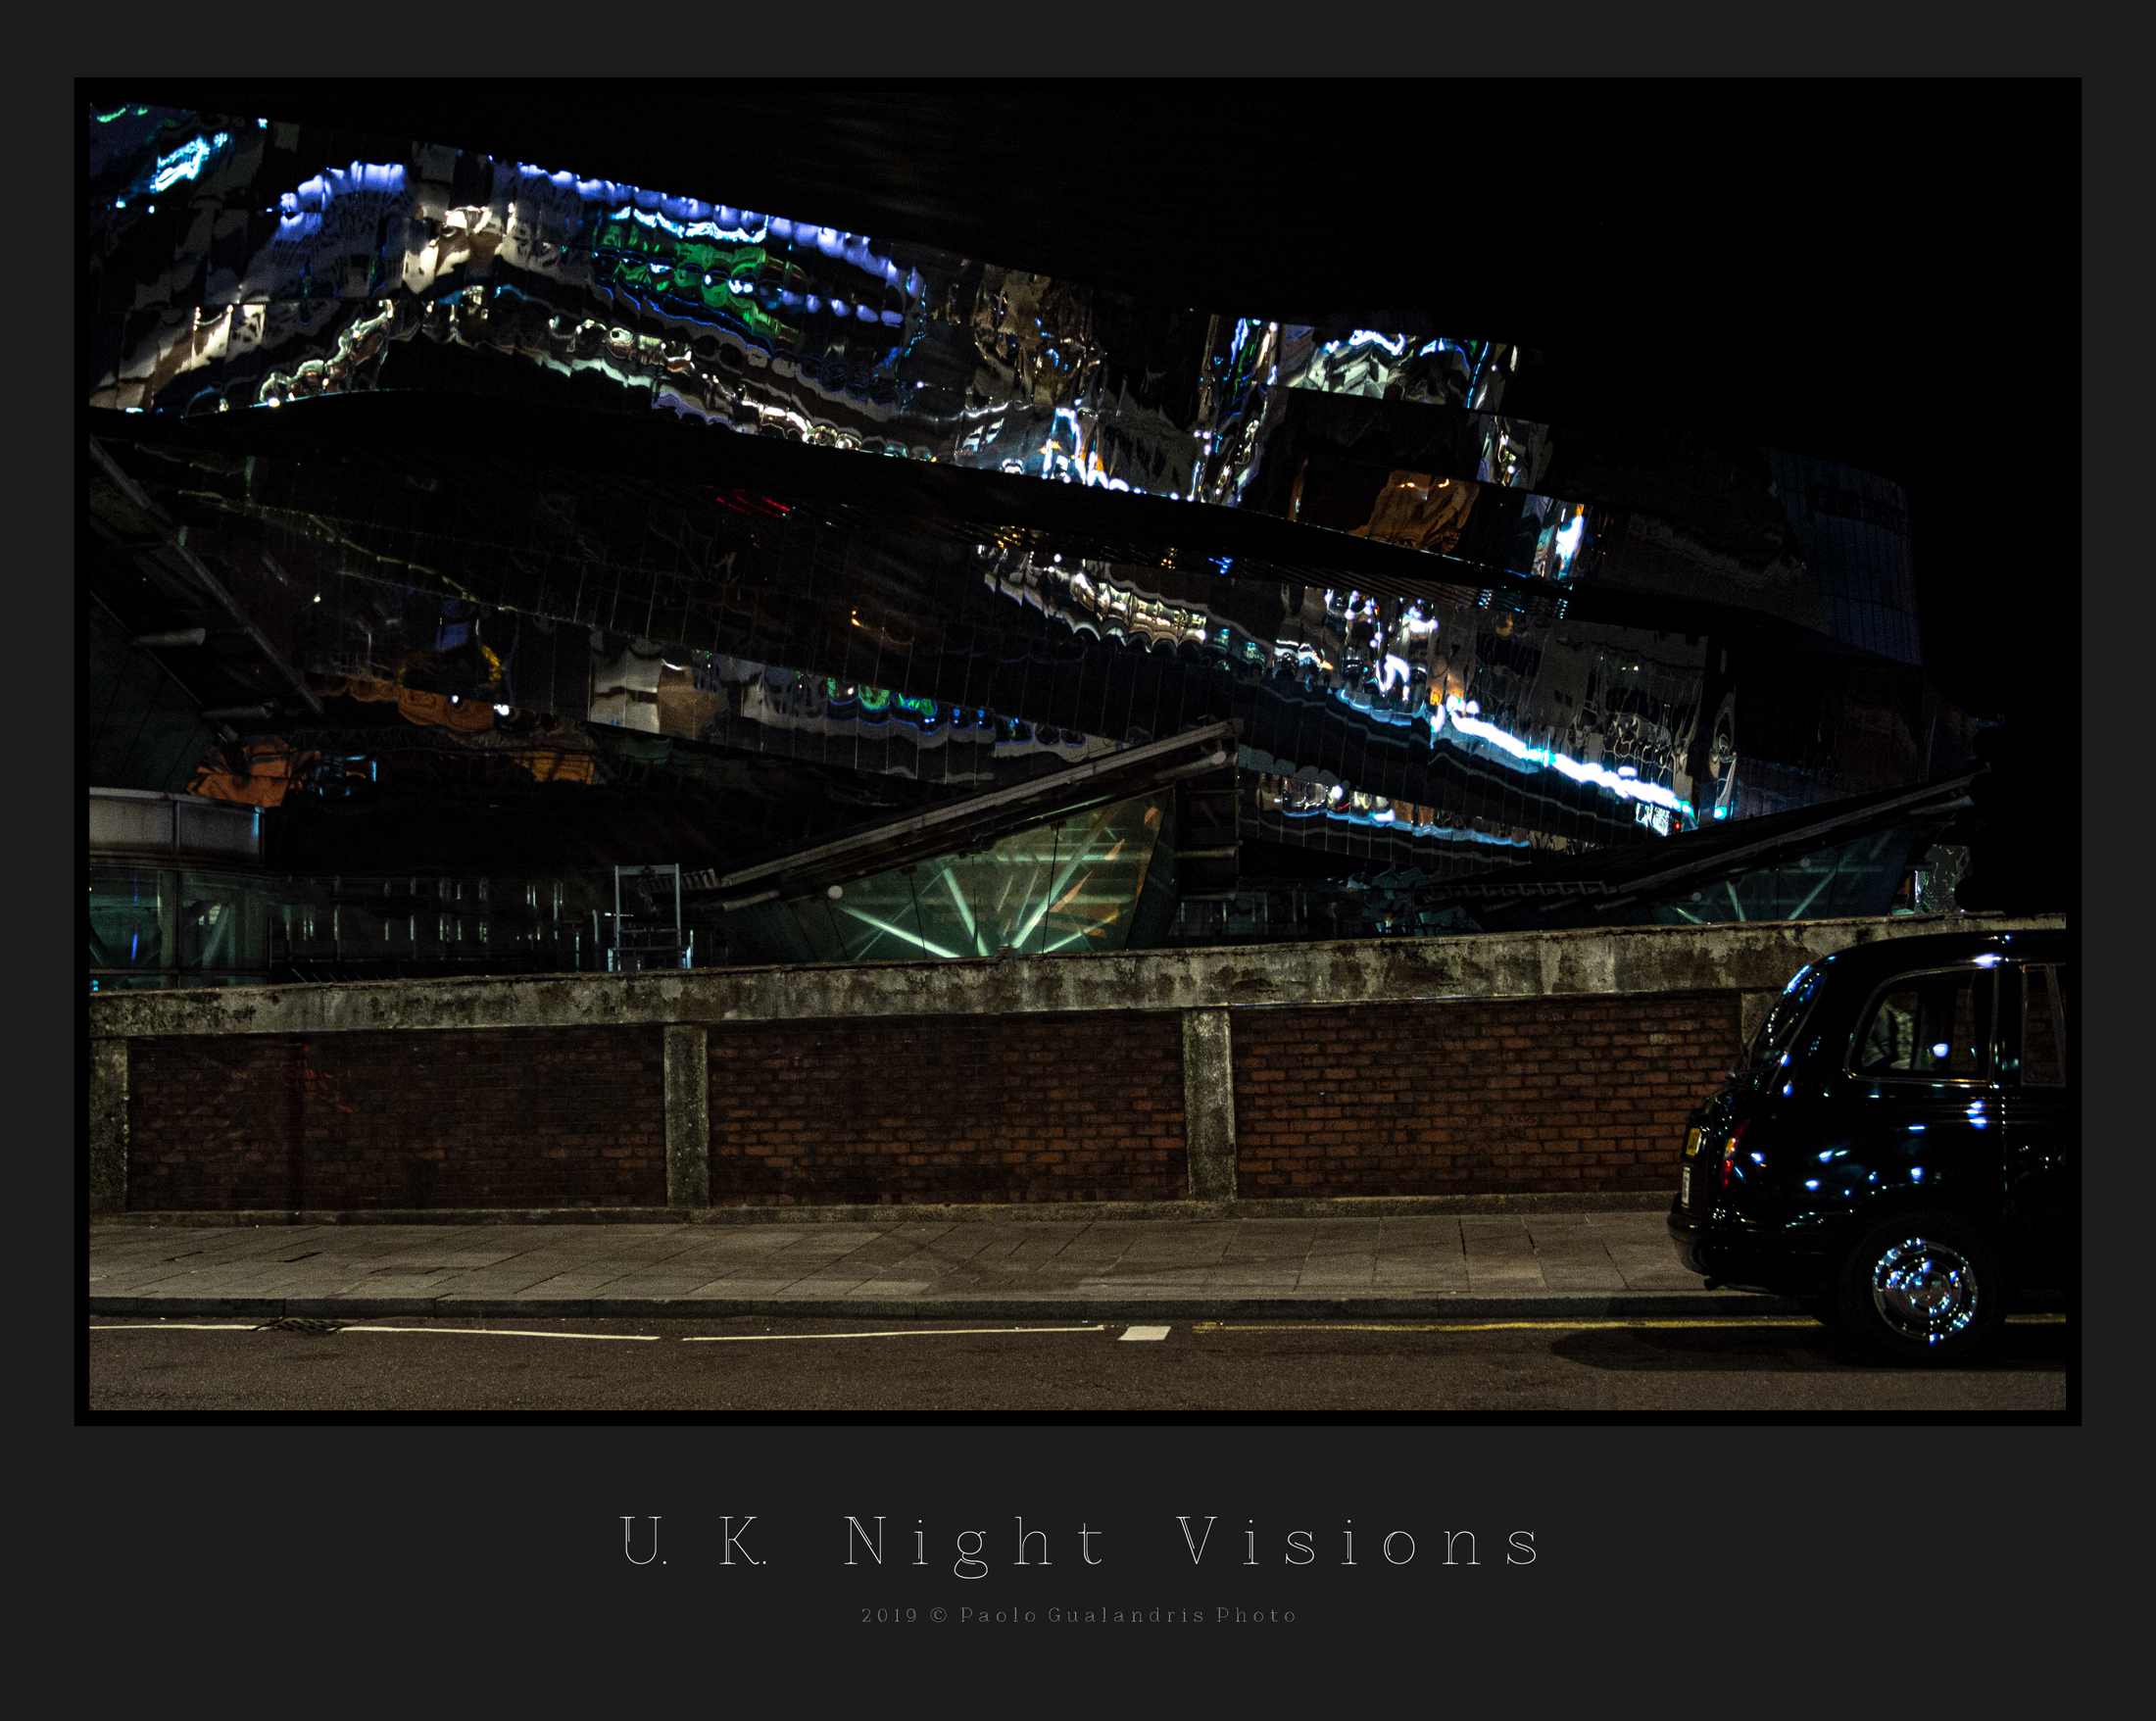 U.K. Night Visions...